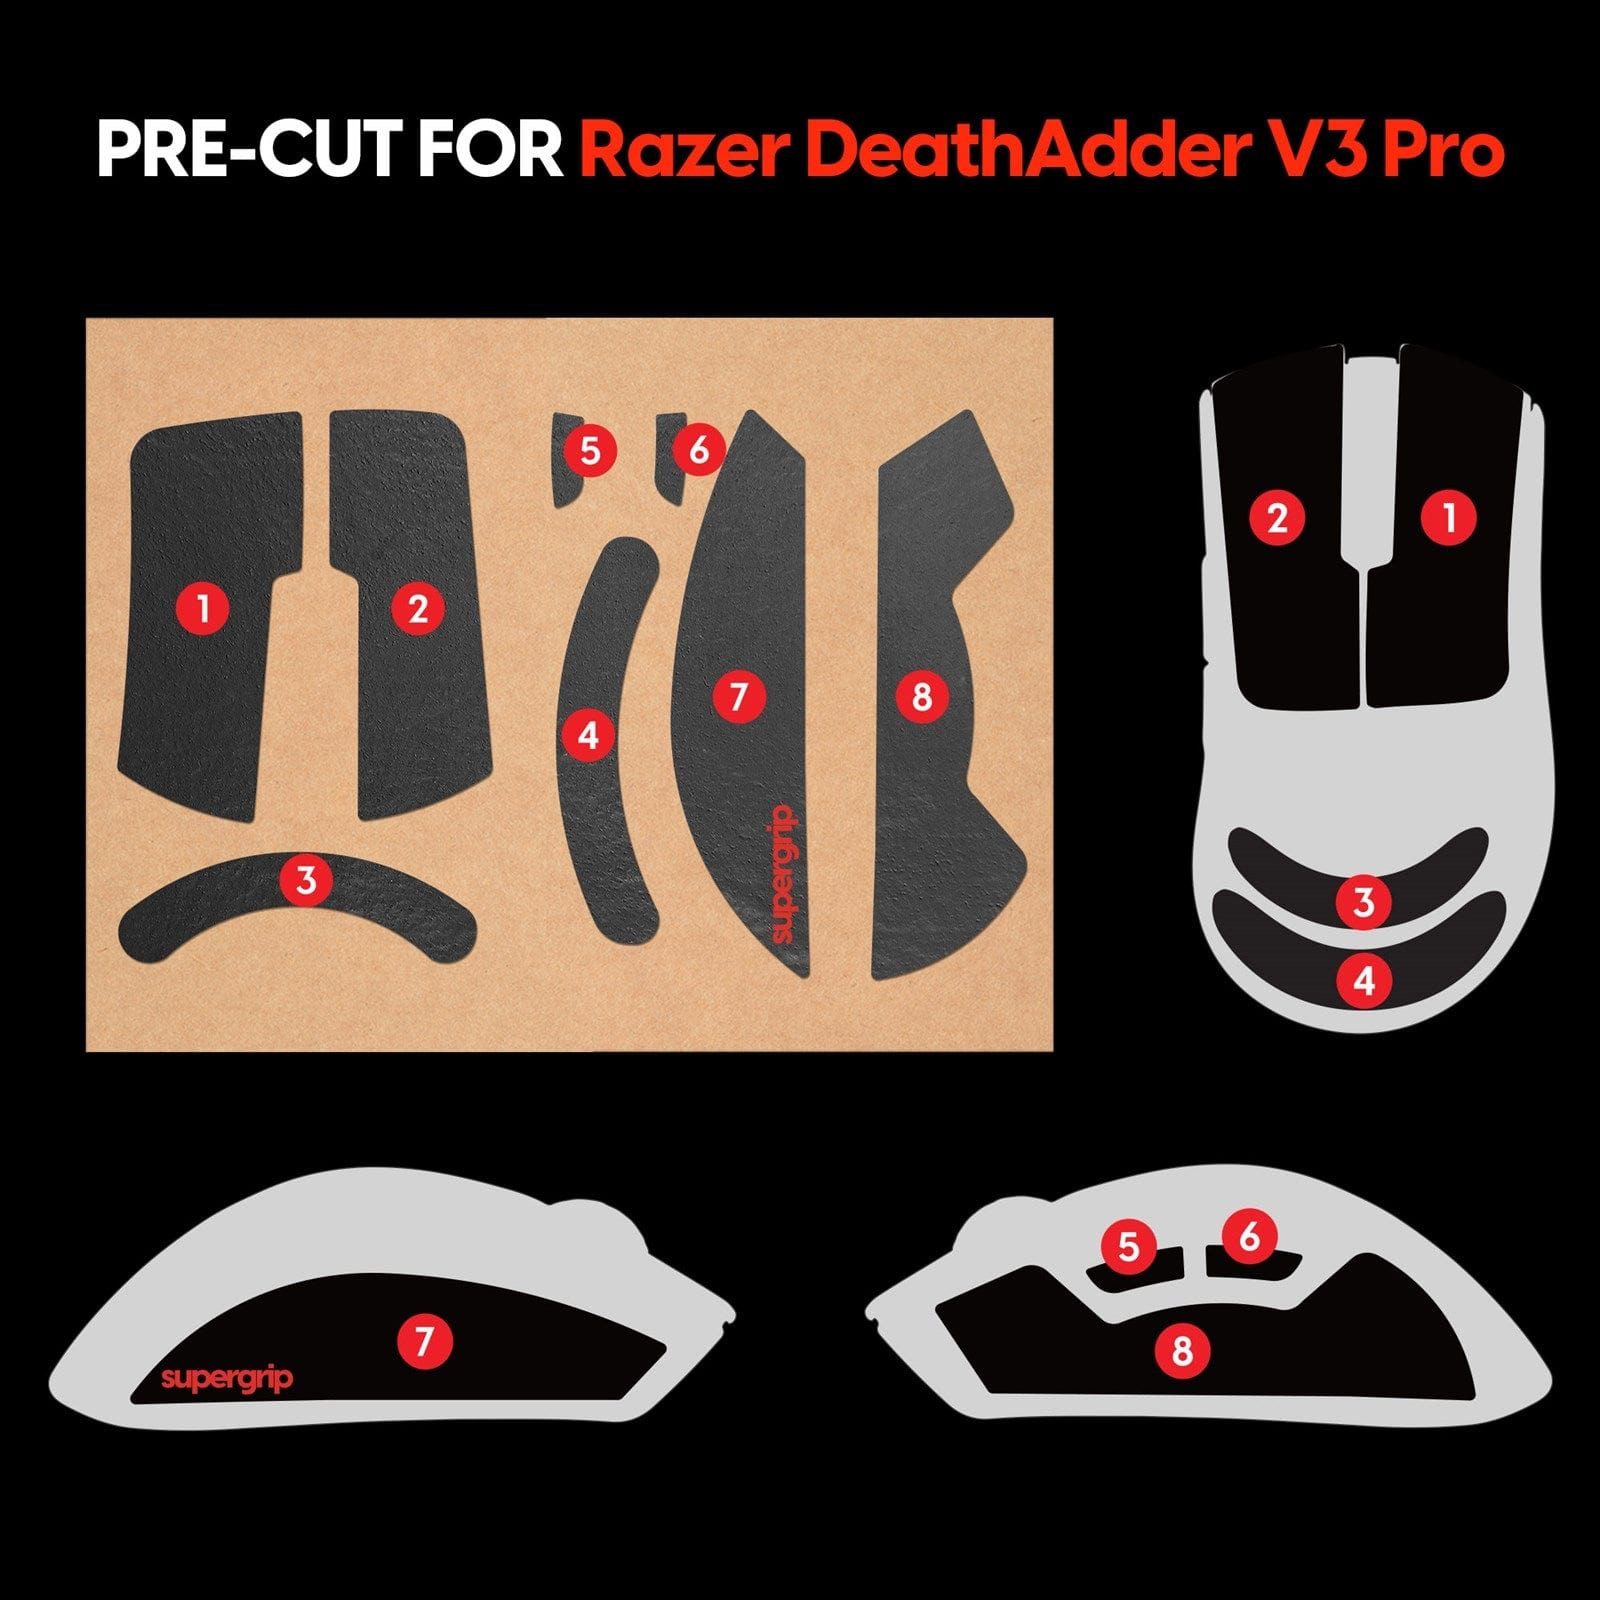 Miếng dán chống trượt Pulsar Supergrip - Grip Tape Precut for Razer DeathAdder V3 Pro